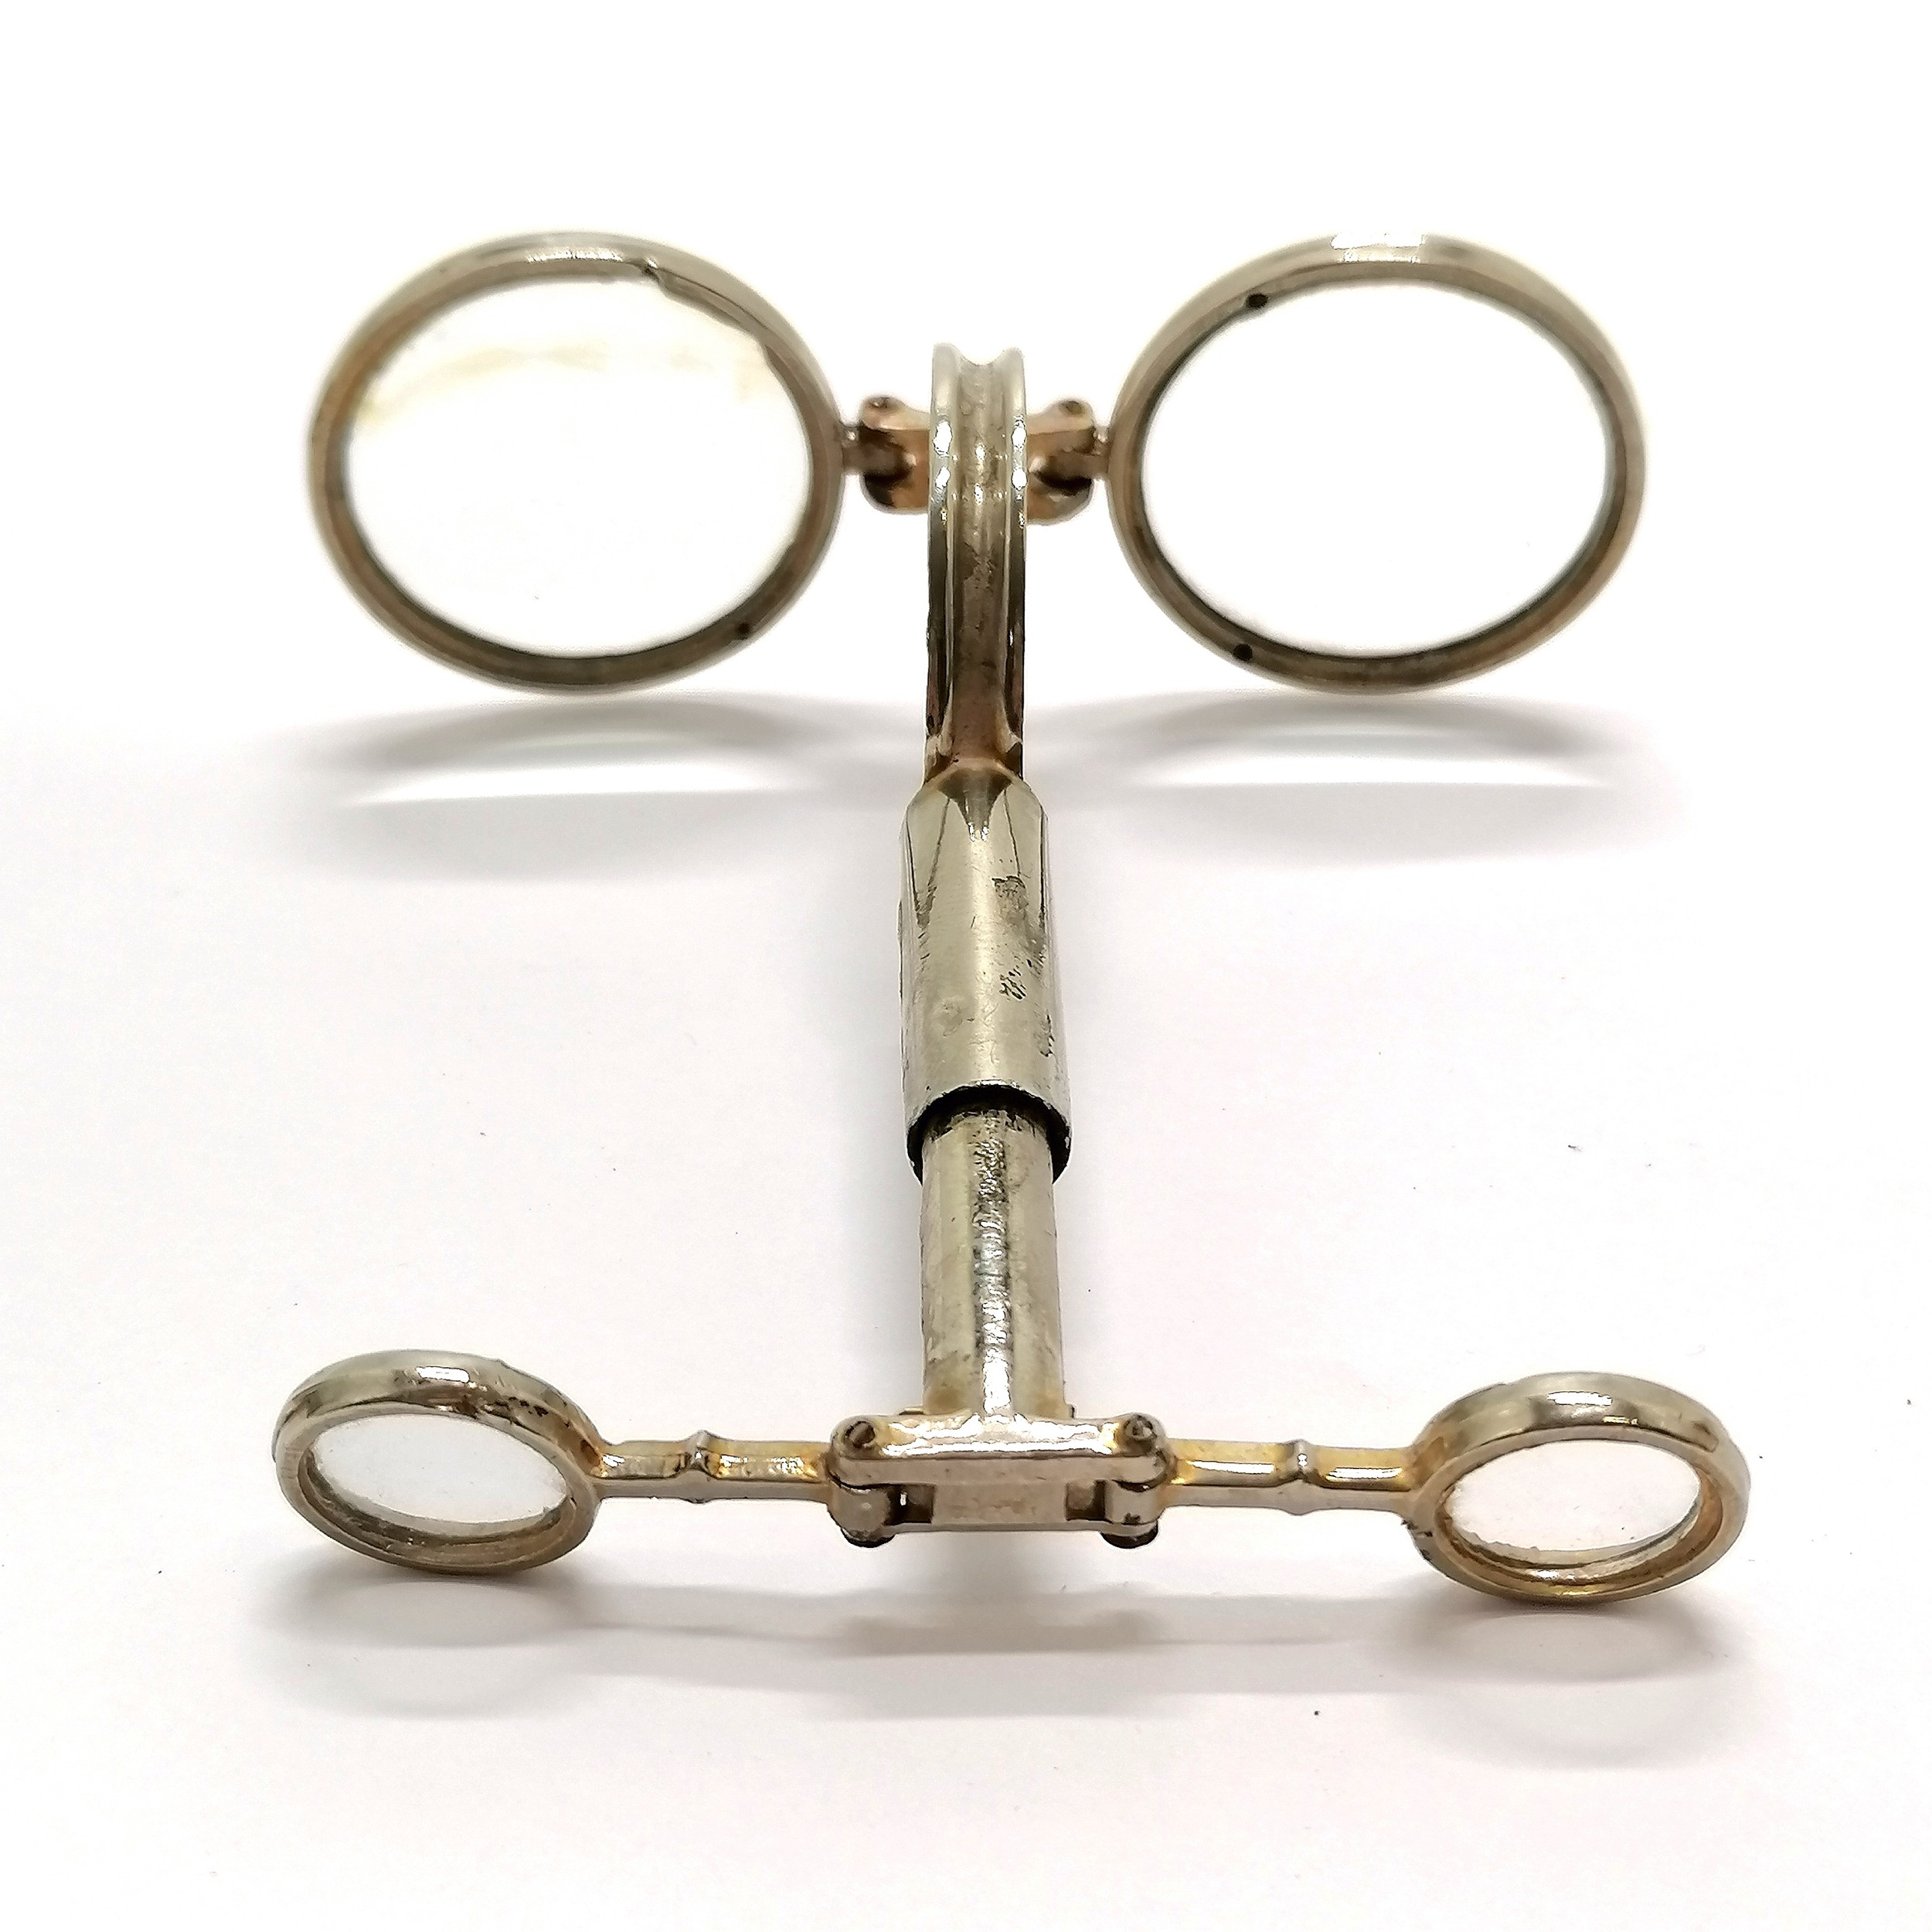 Antique novelty pocket binocular / magnifier with folding mechanism - length closed 8.4cm - Image 2 of 3